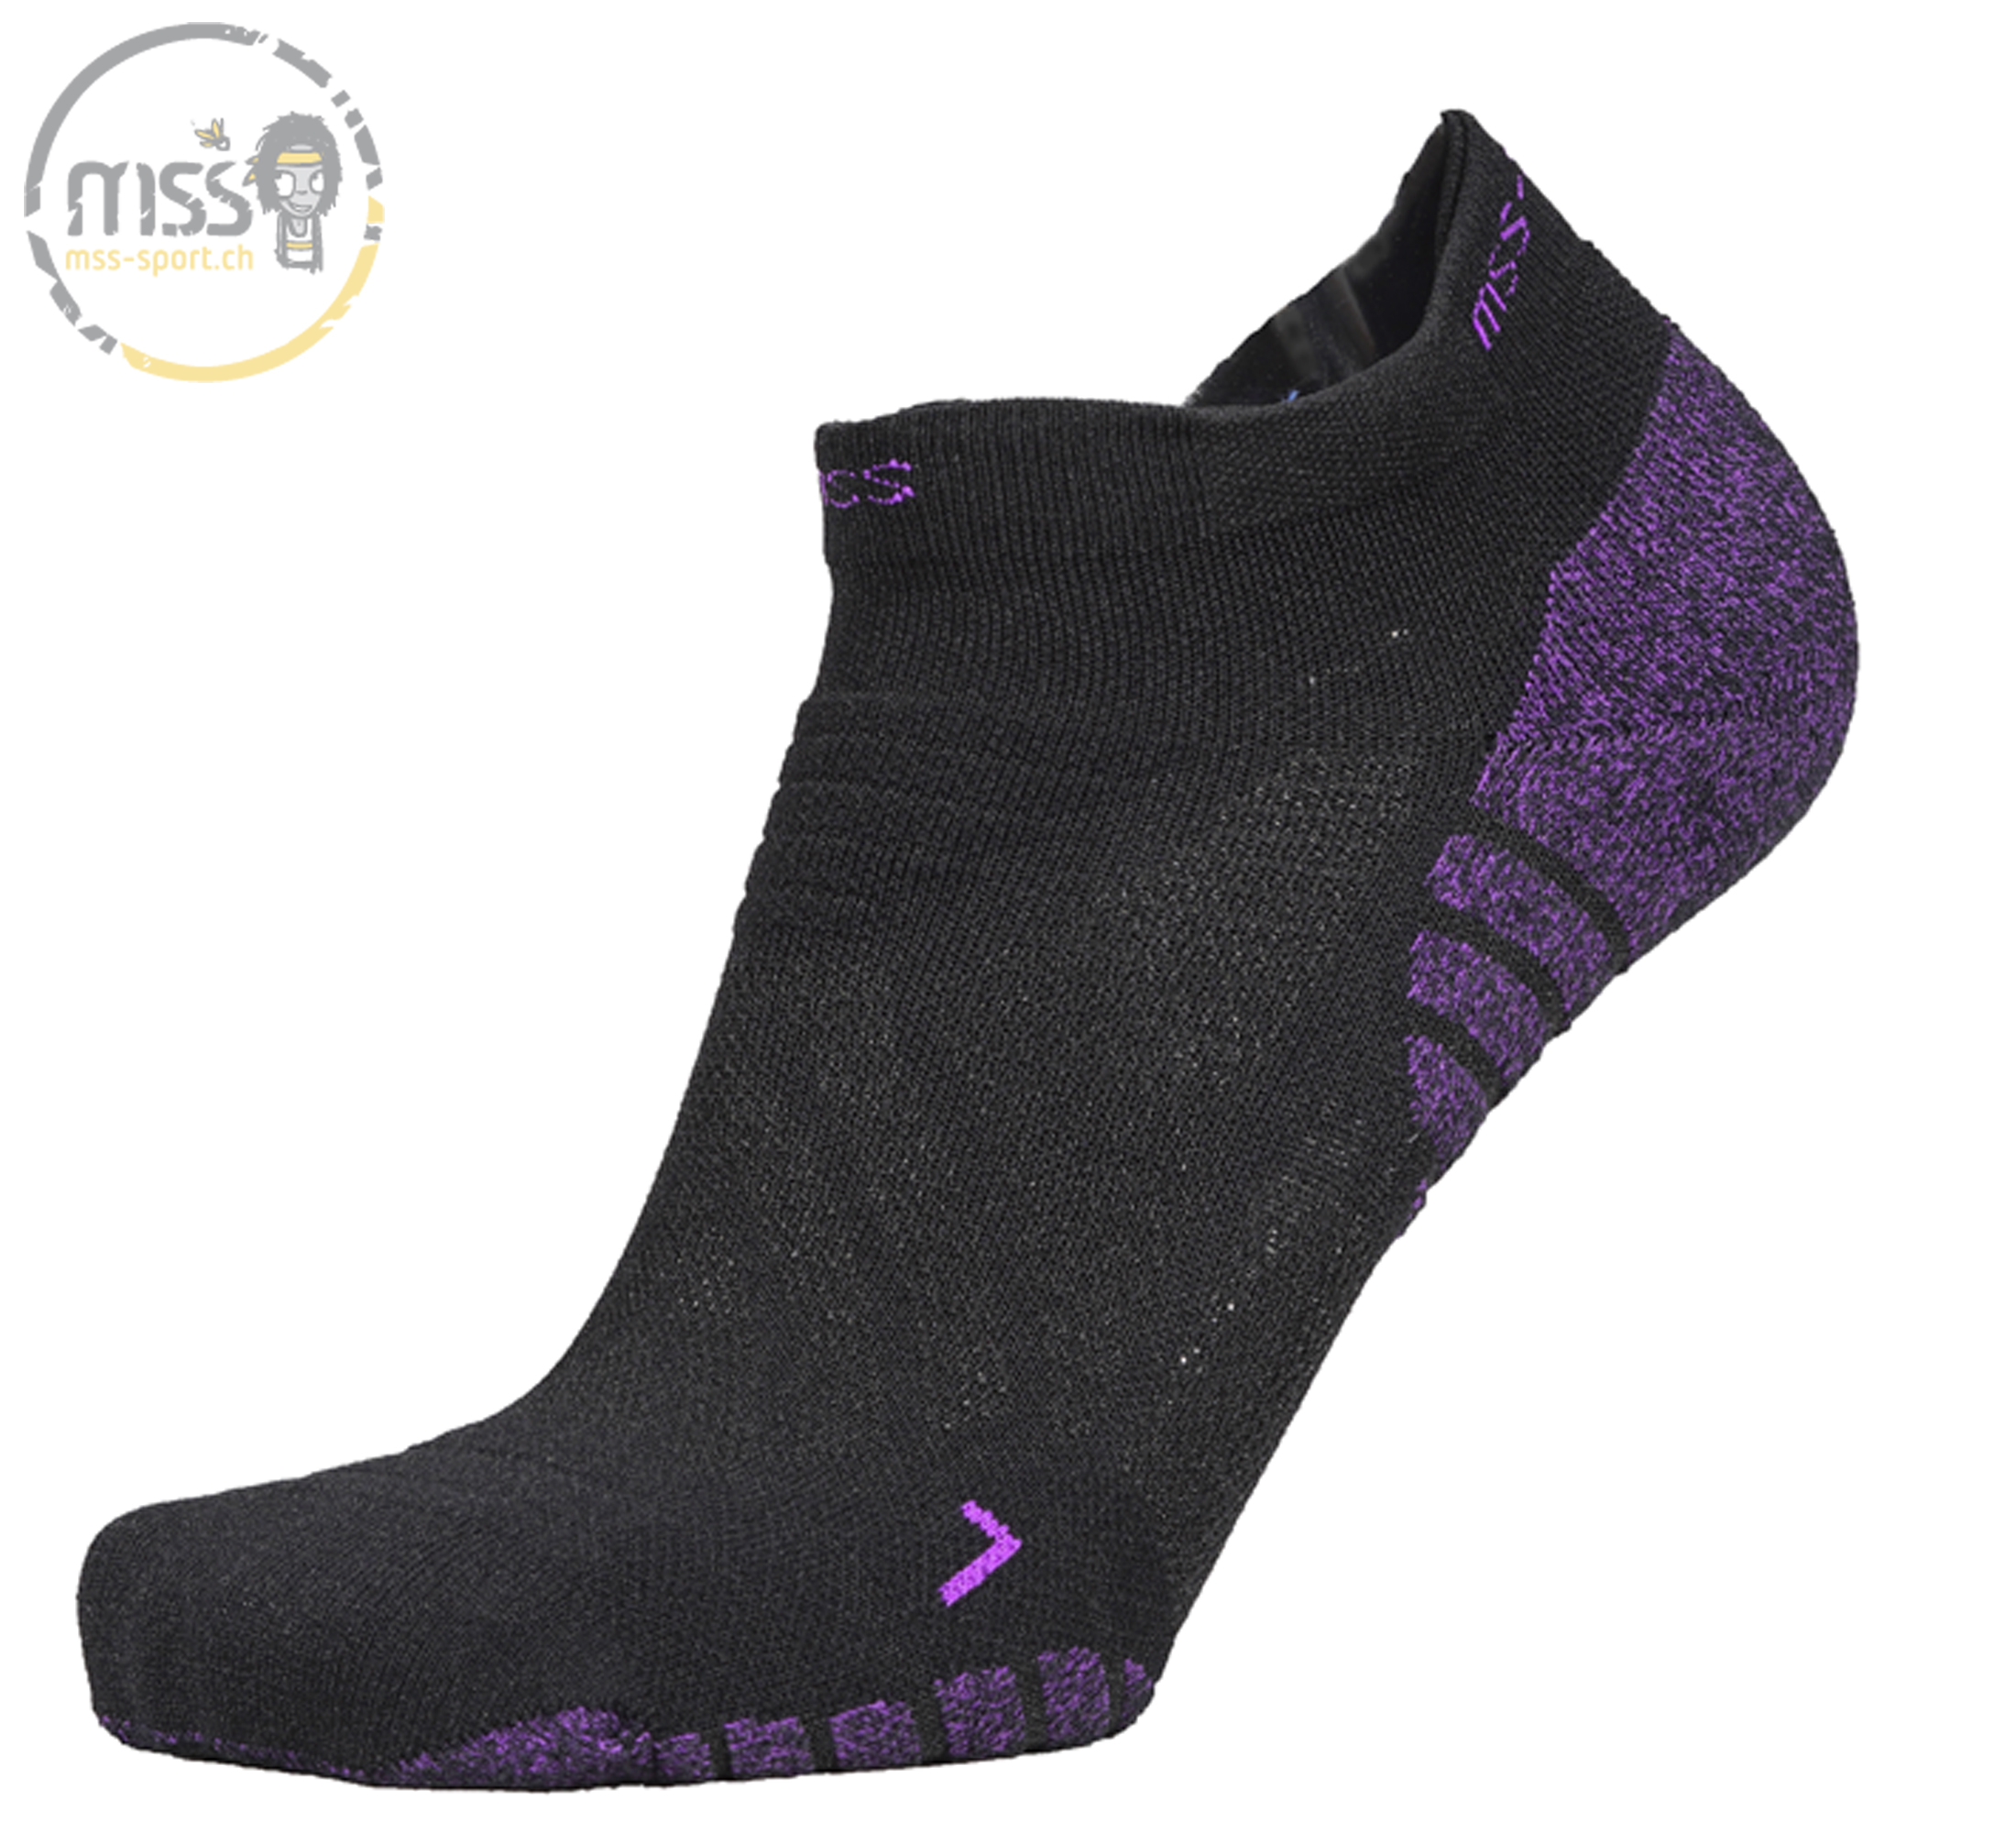 mss-socks GO 7300 low Lady black purple